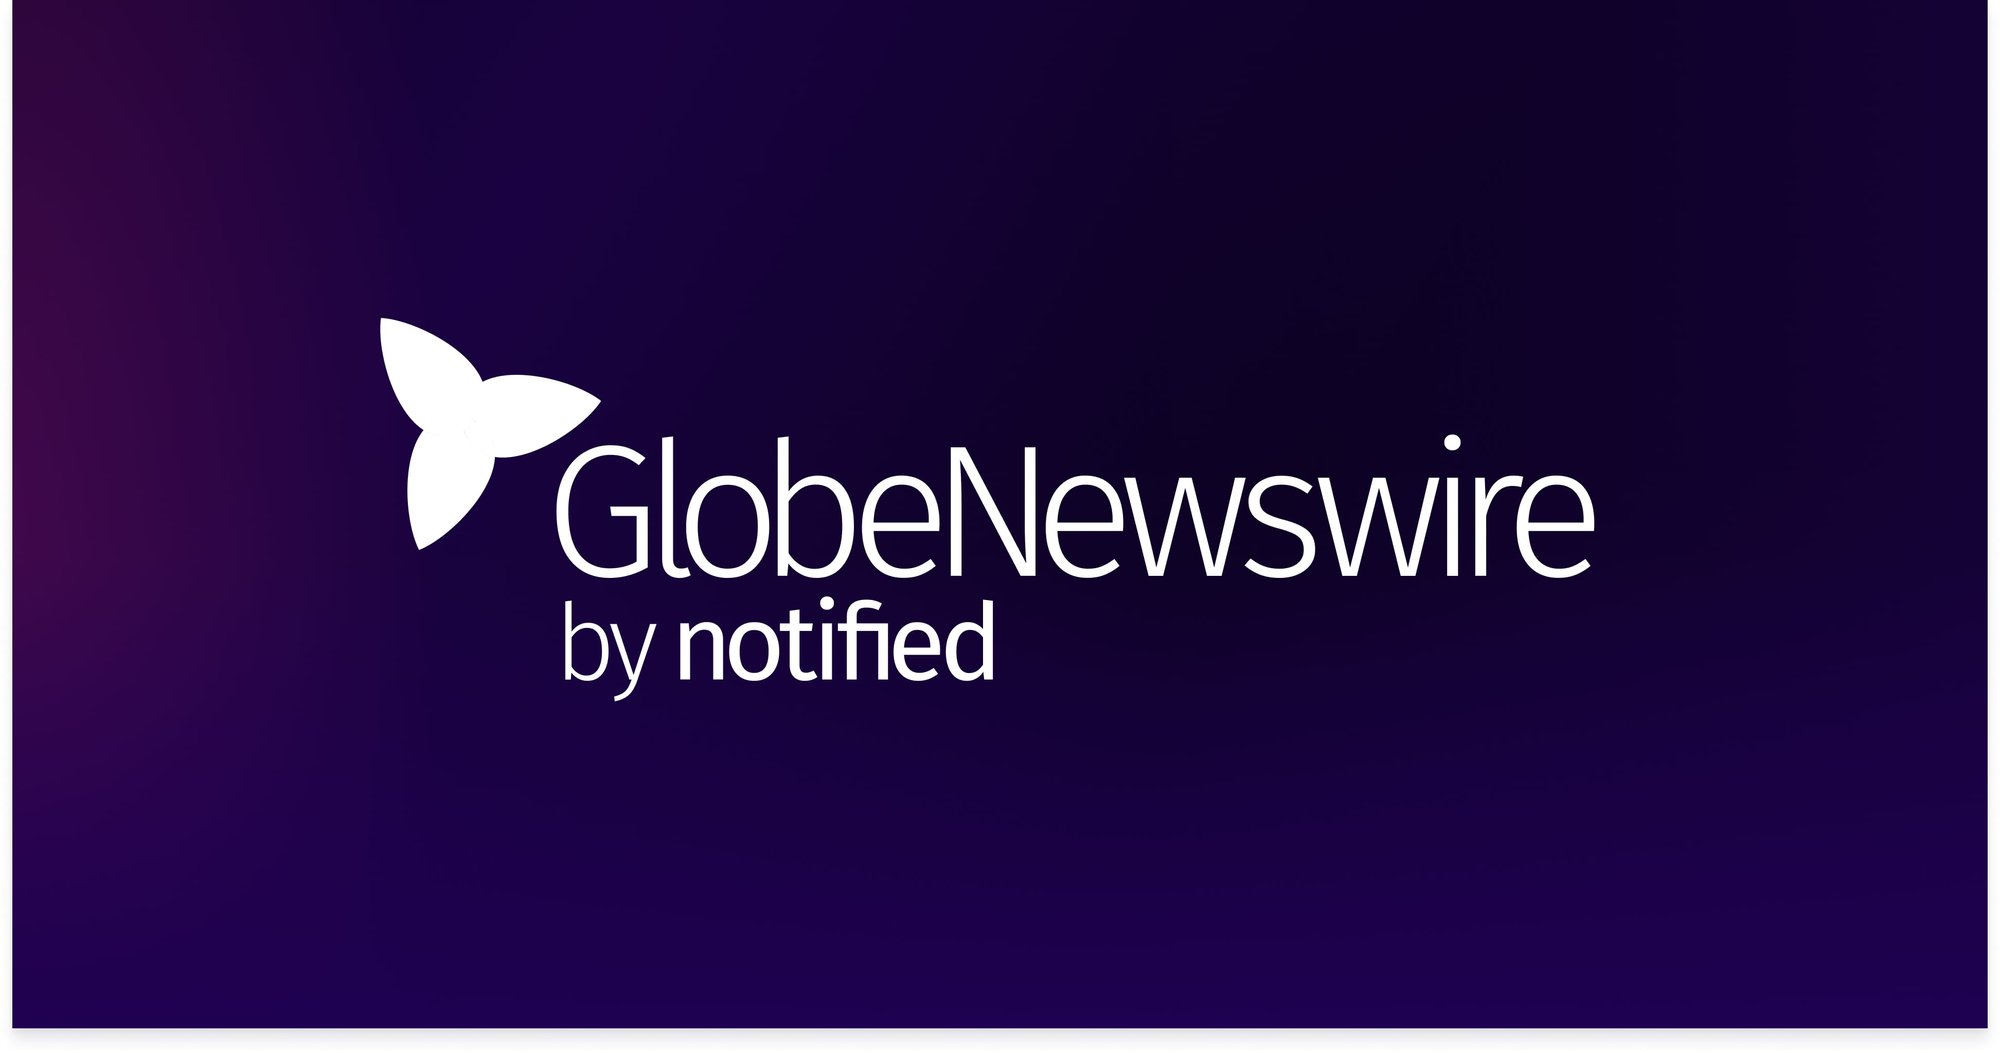 GlobeNewsire